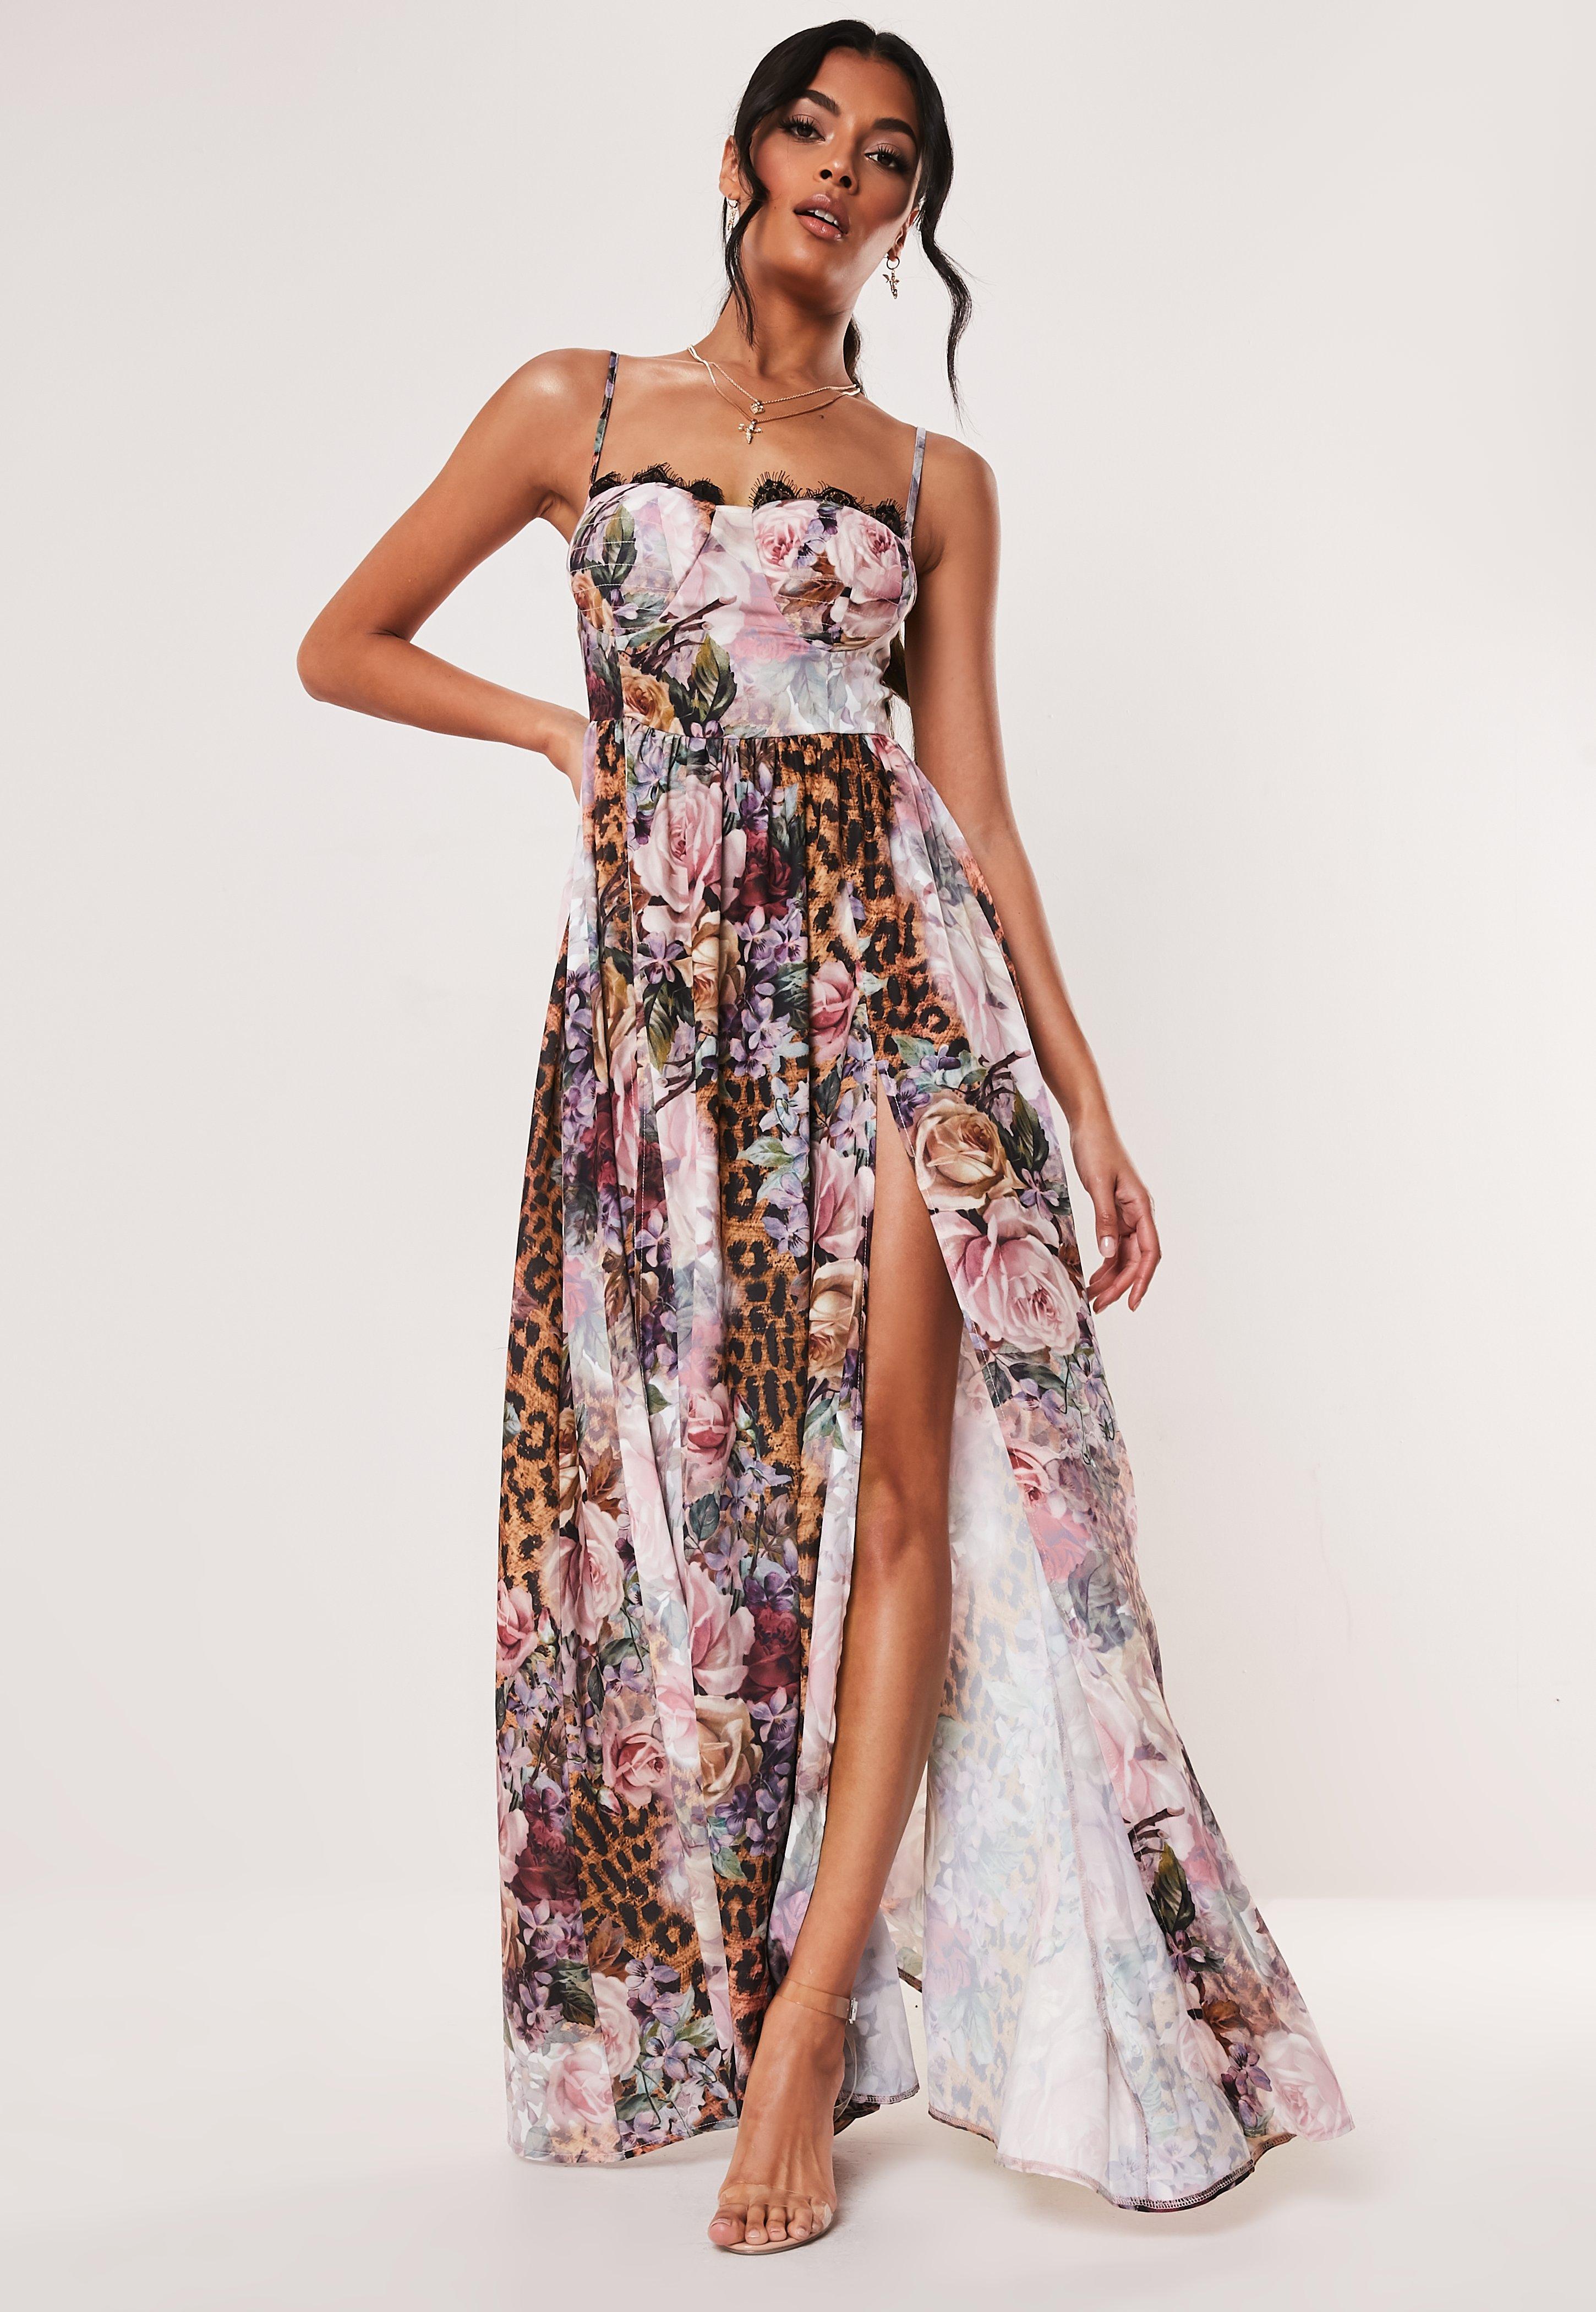 leopard print floral dress